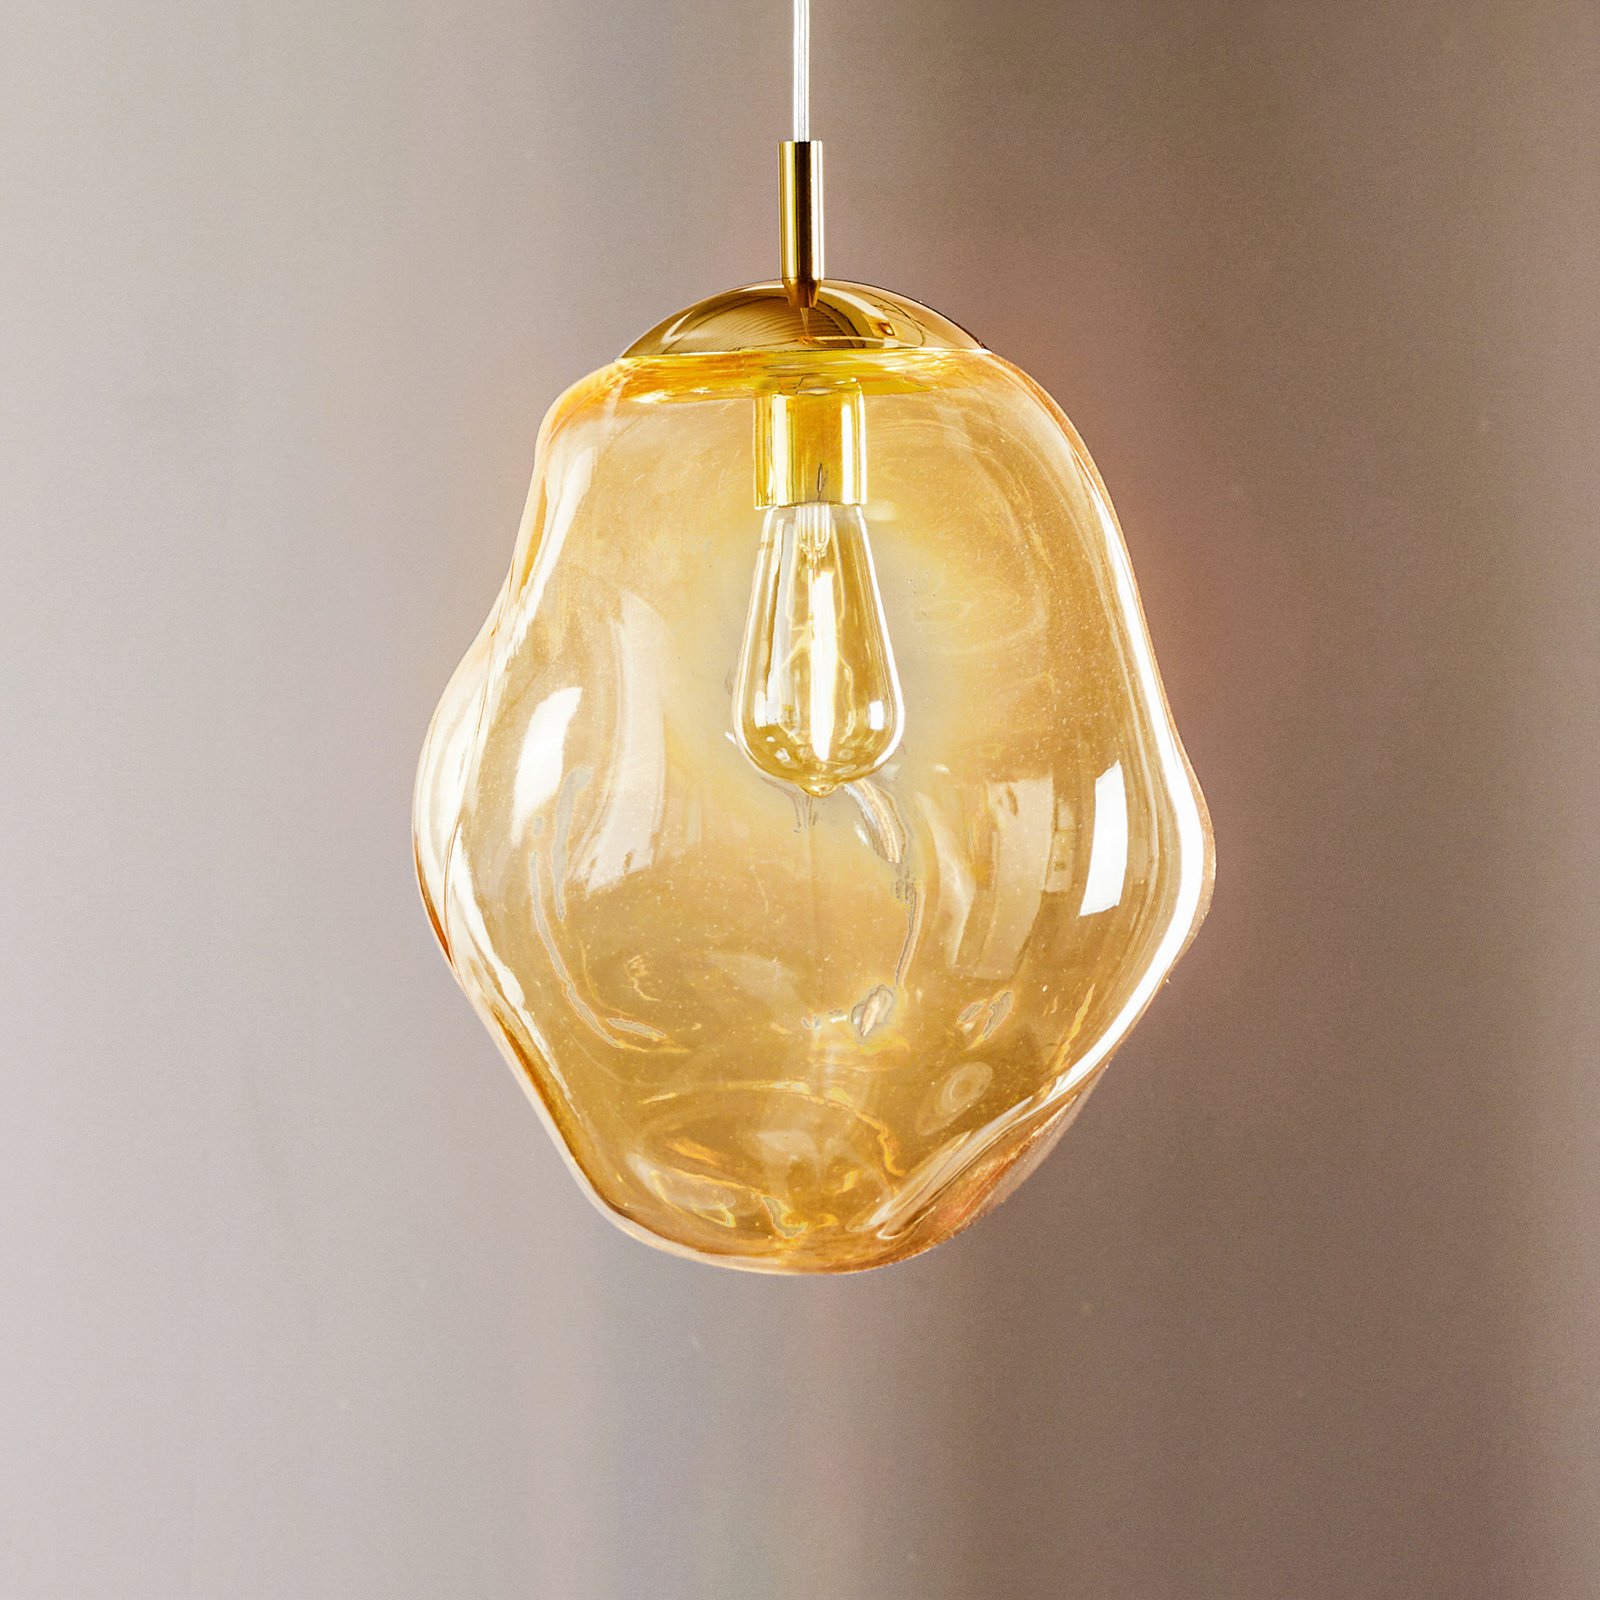 Sol glass hanging light, Ø 35 cm, gold/amber